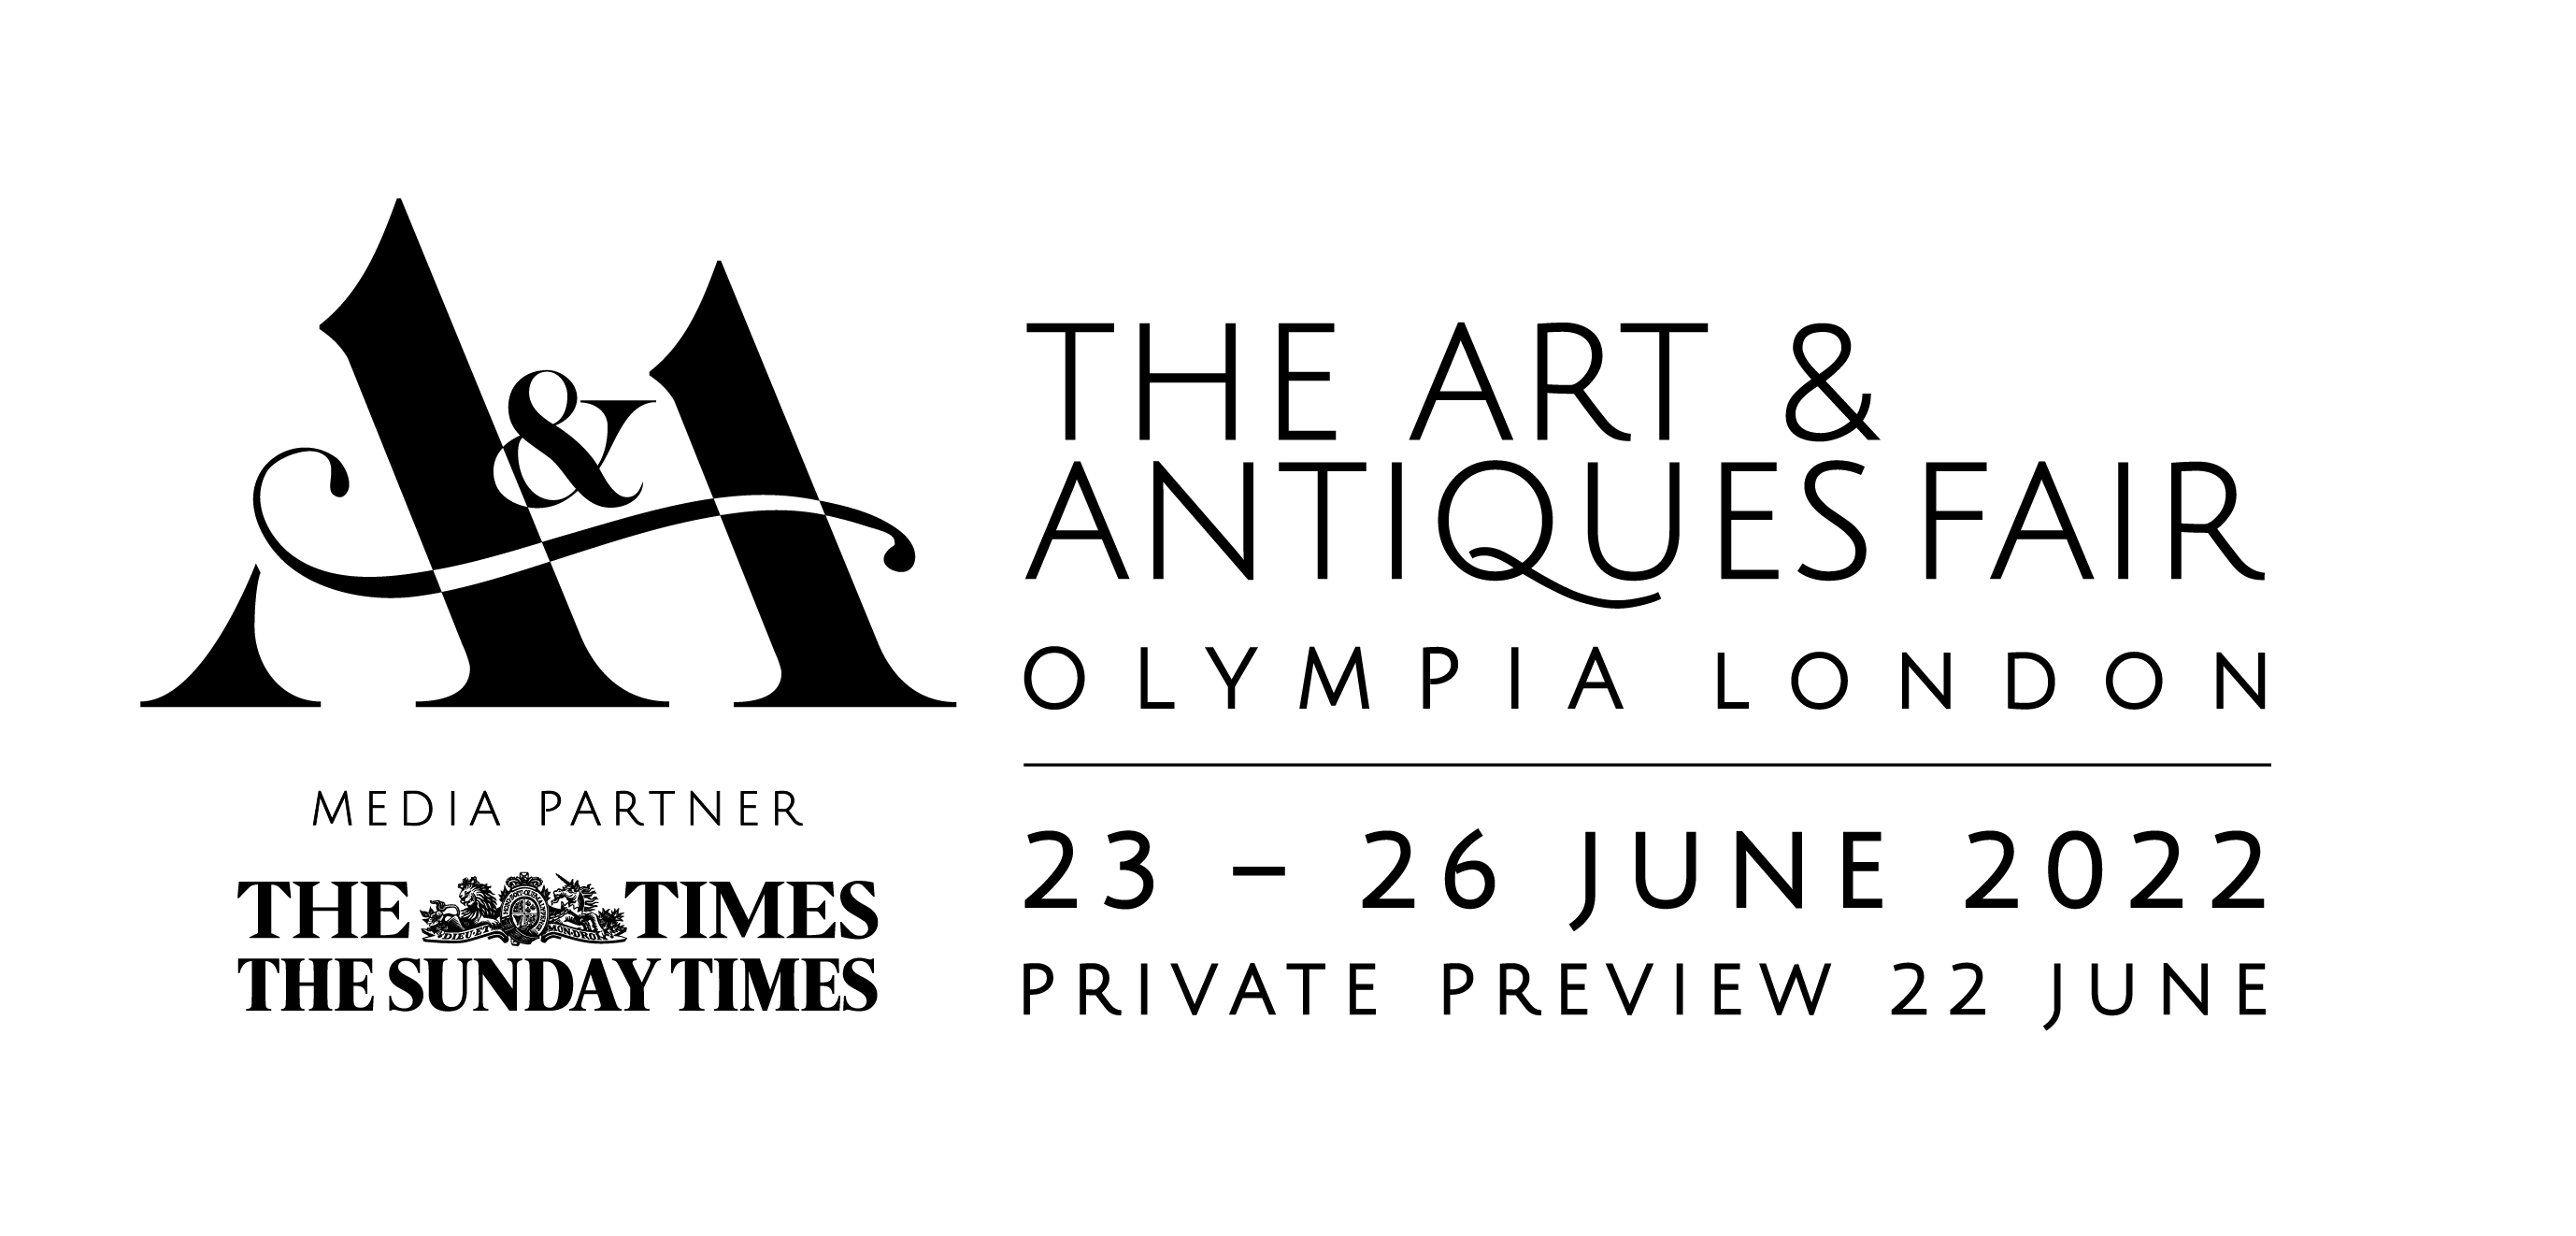 Art & Antiques Fair Olympia